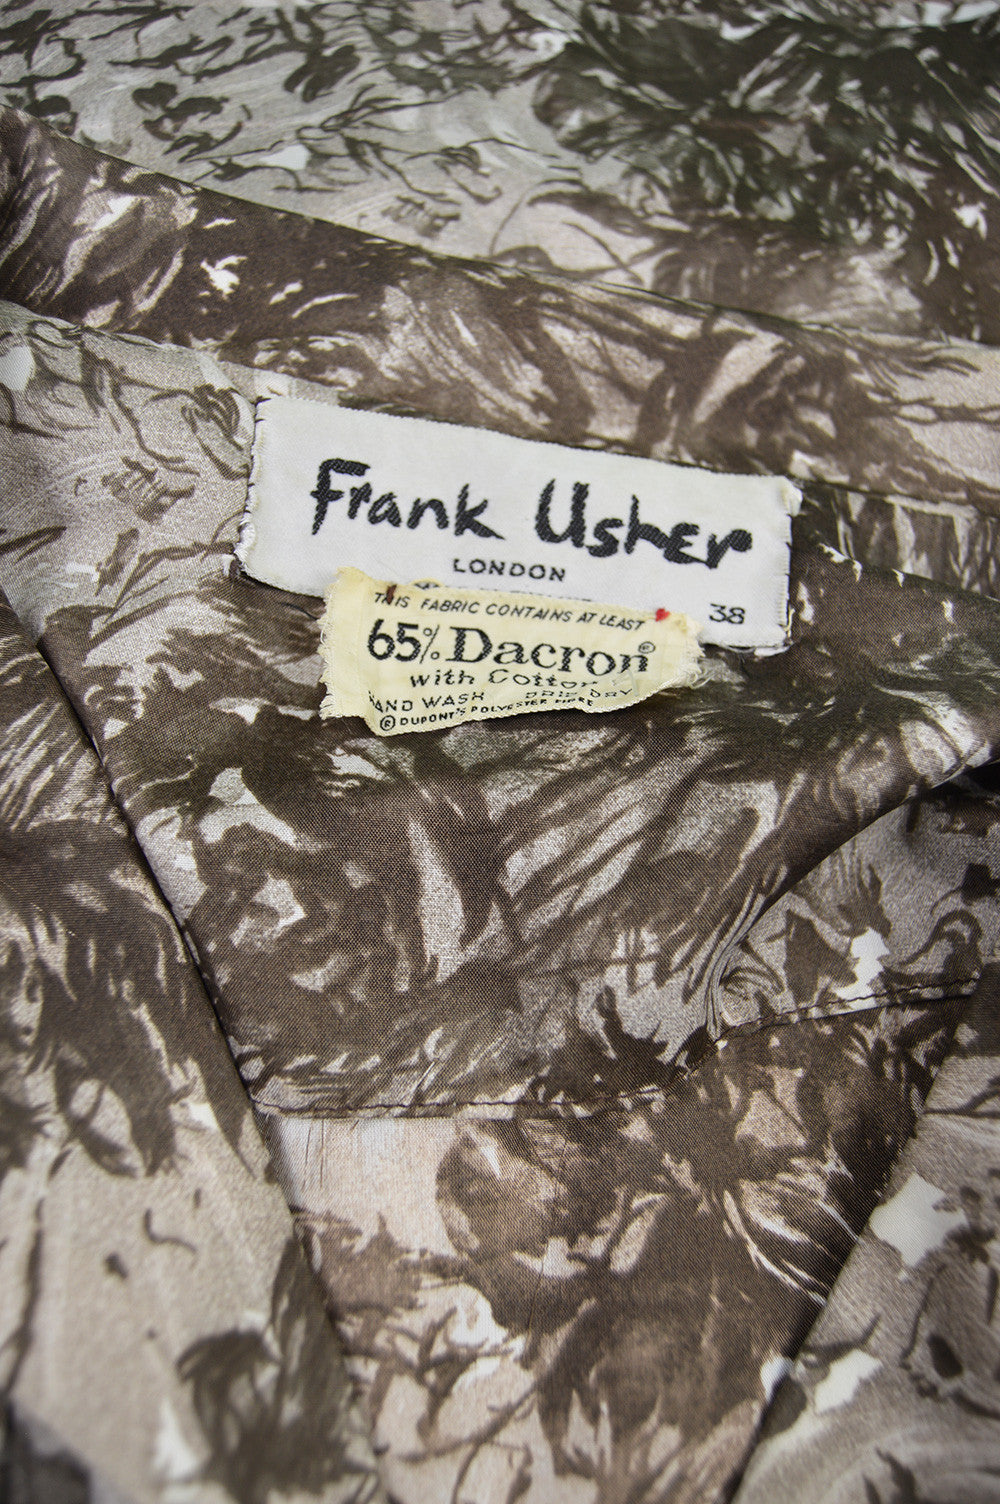 1960s Frank Usher label